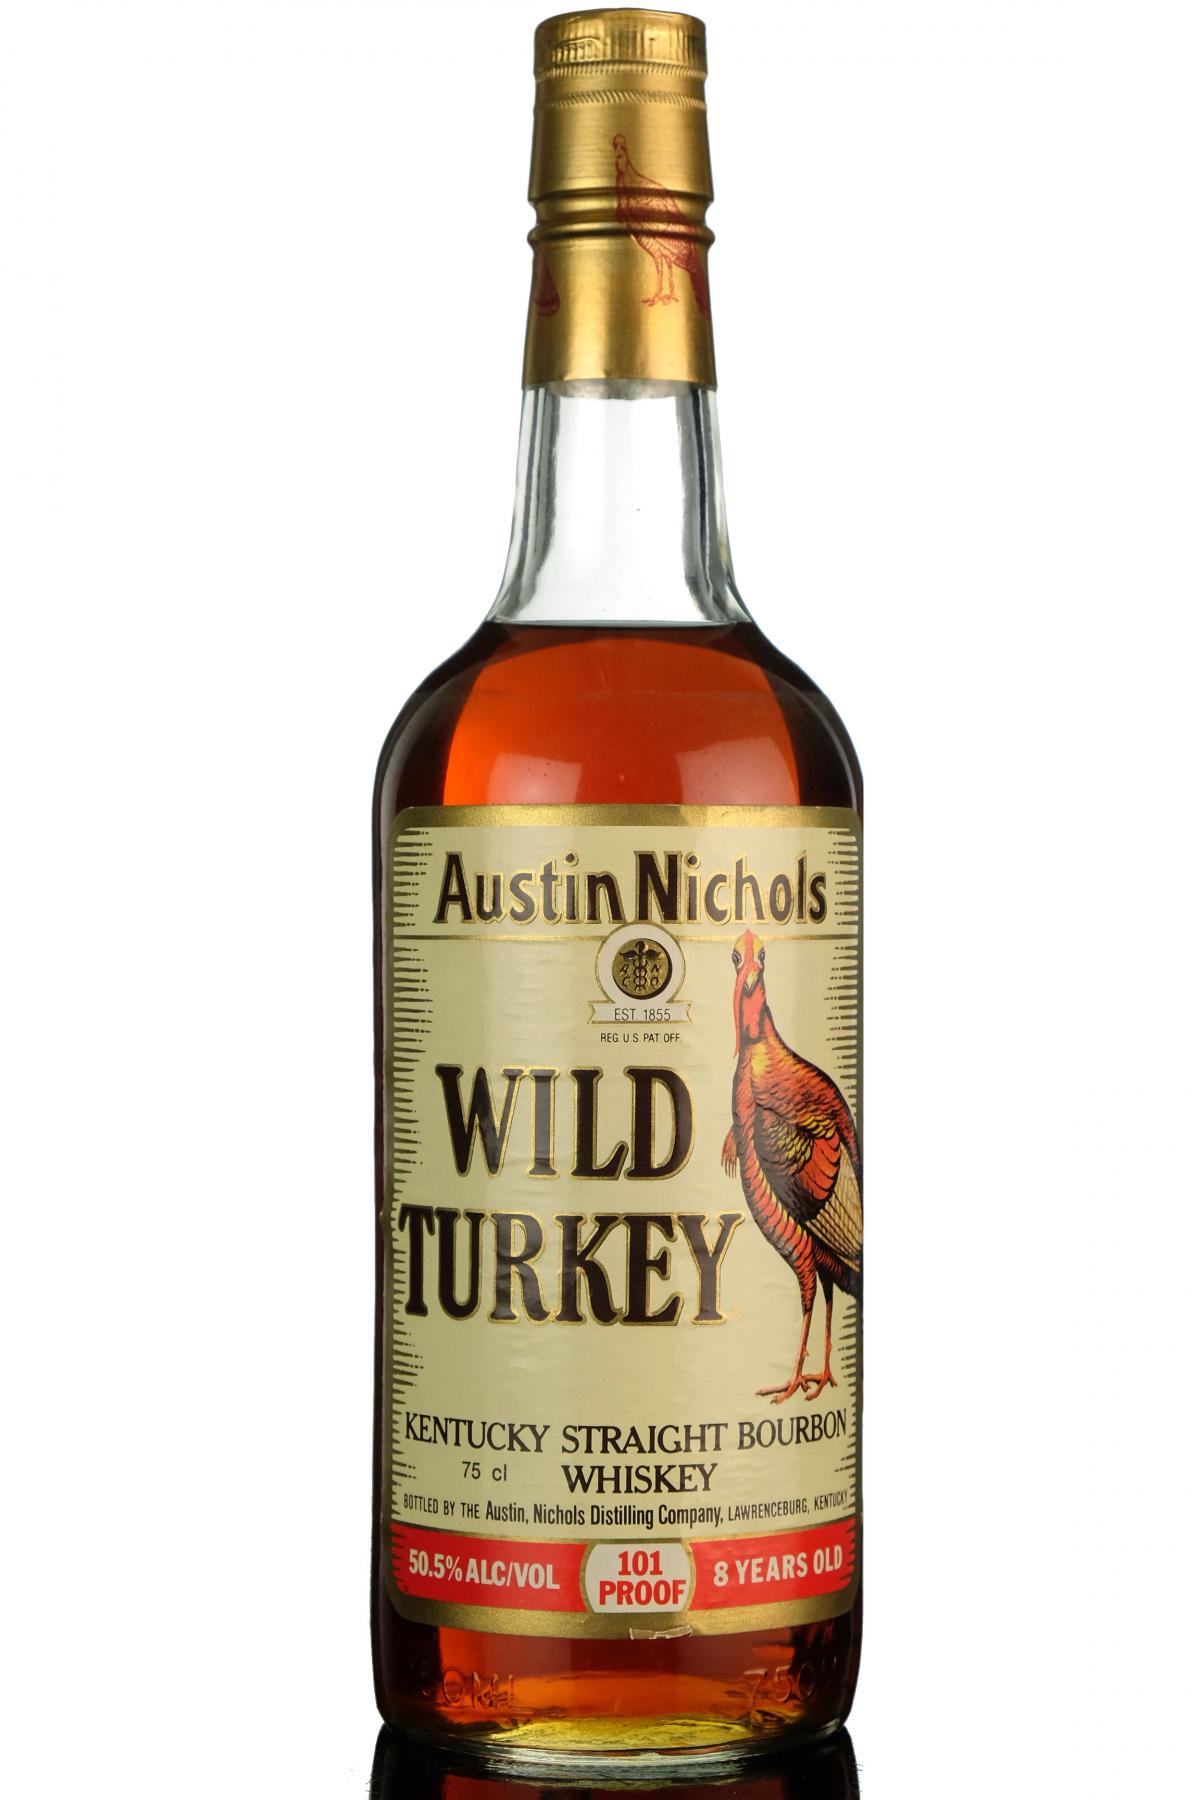 Austin Nichols Wild Turkey 8 Year Old - 101 Proof - 1990s